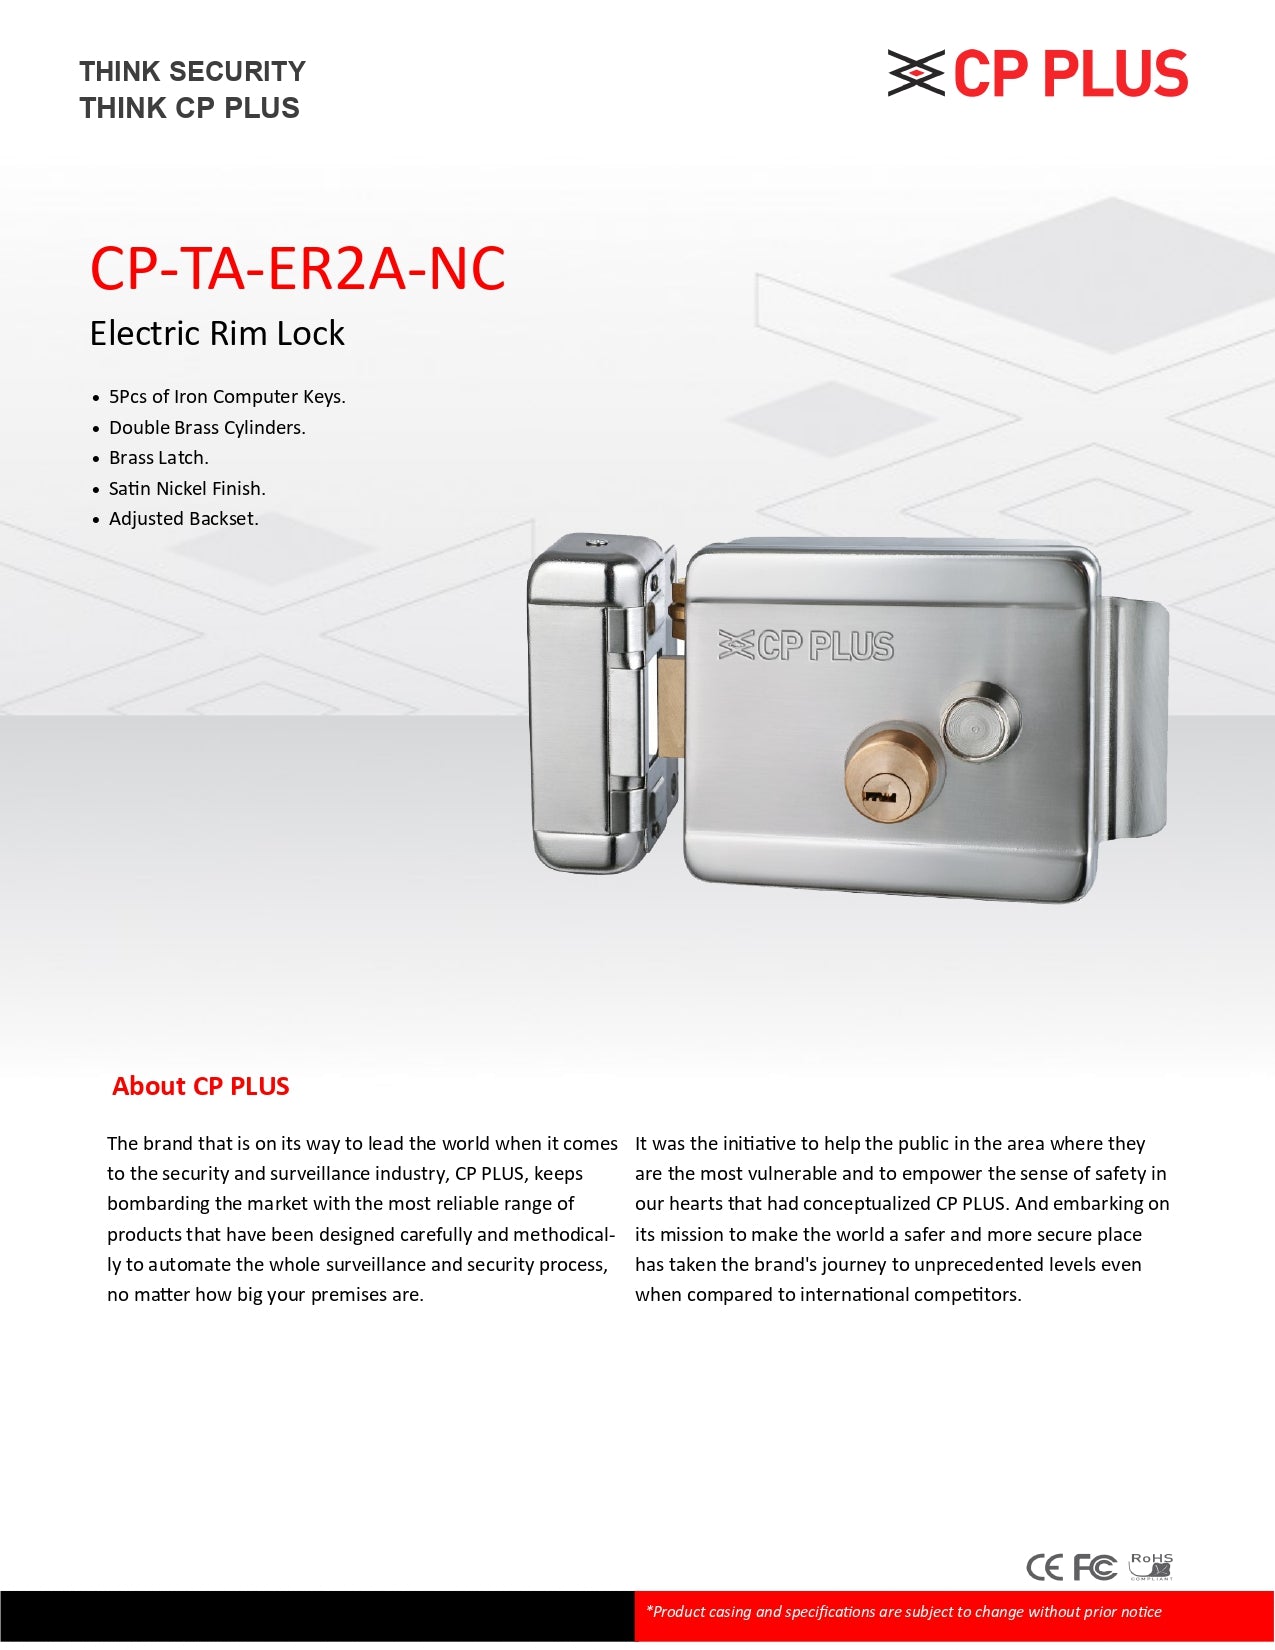 CP Plus Electronic Rim Lock